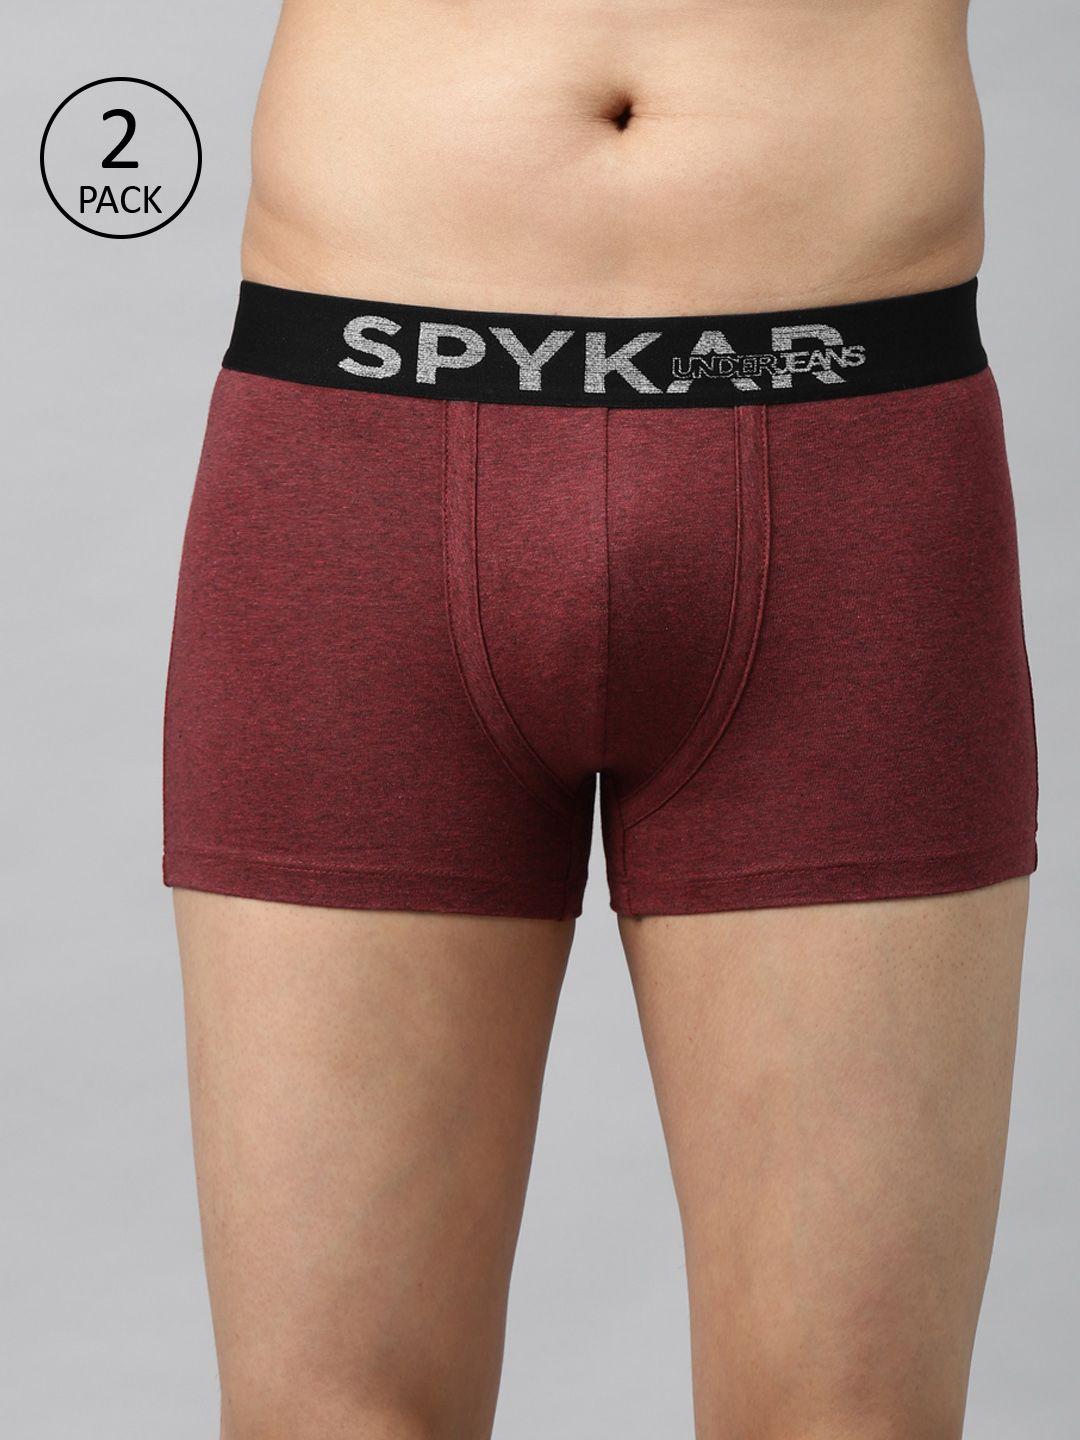 underjeans-by-spykar-men-pack-of-2-solid-trunks-8907966432055